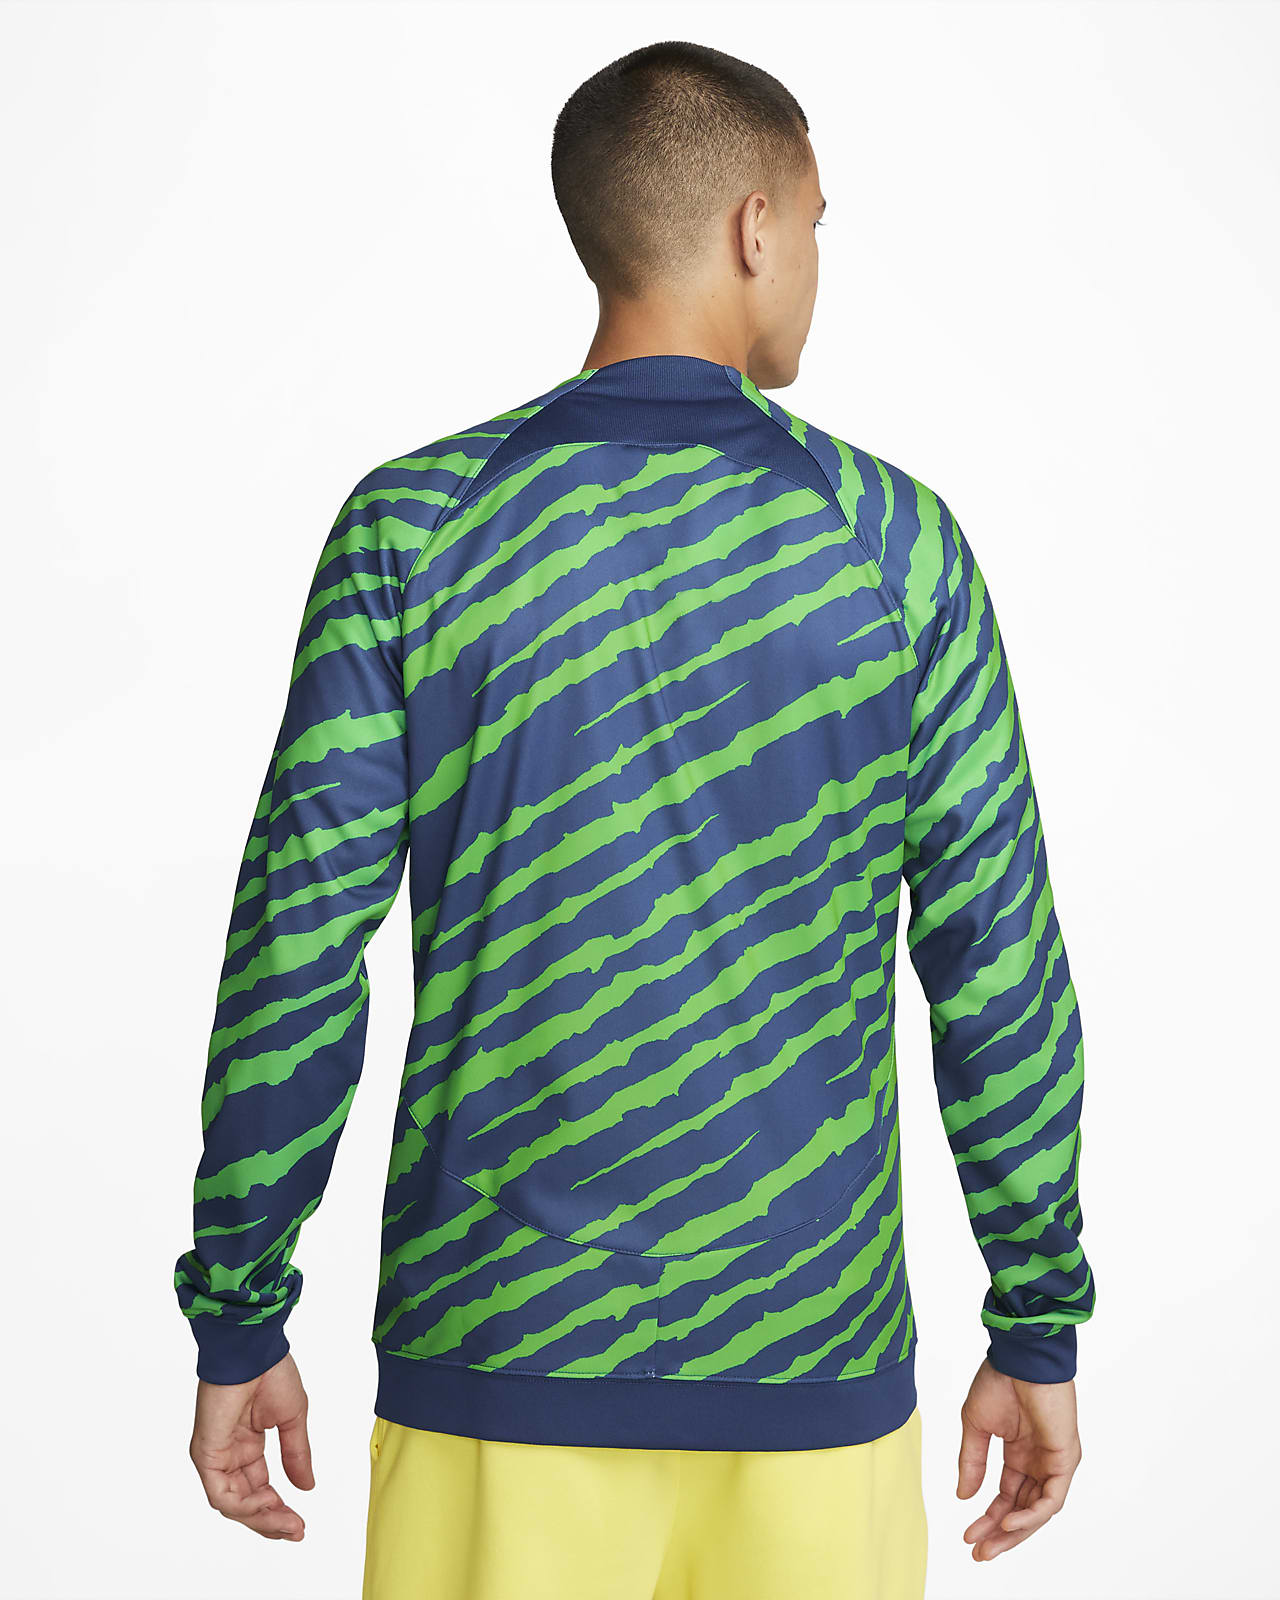 Brasil Academy Pro Men's Full-Zip Knit Soccer Jacket